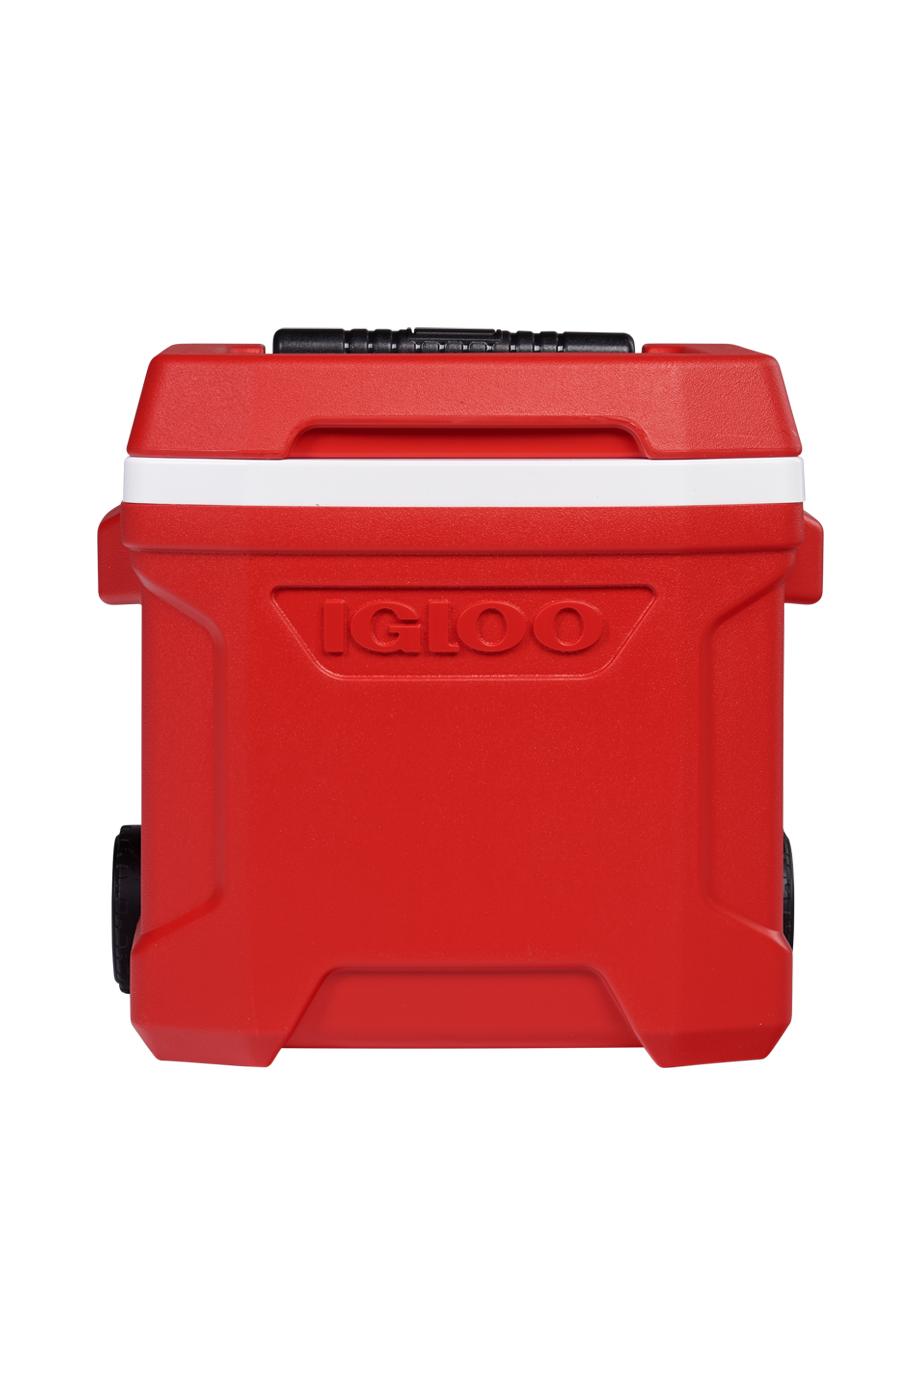 Igloo Profile II Wheeled Cooler - Red; image 4 of 4